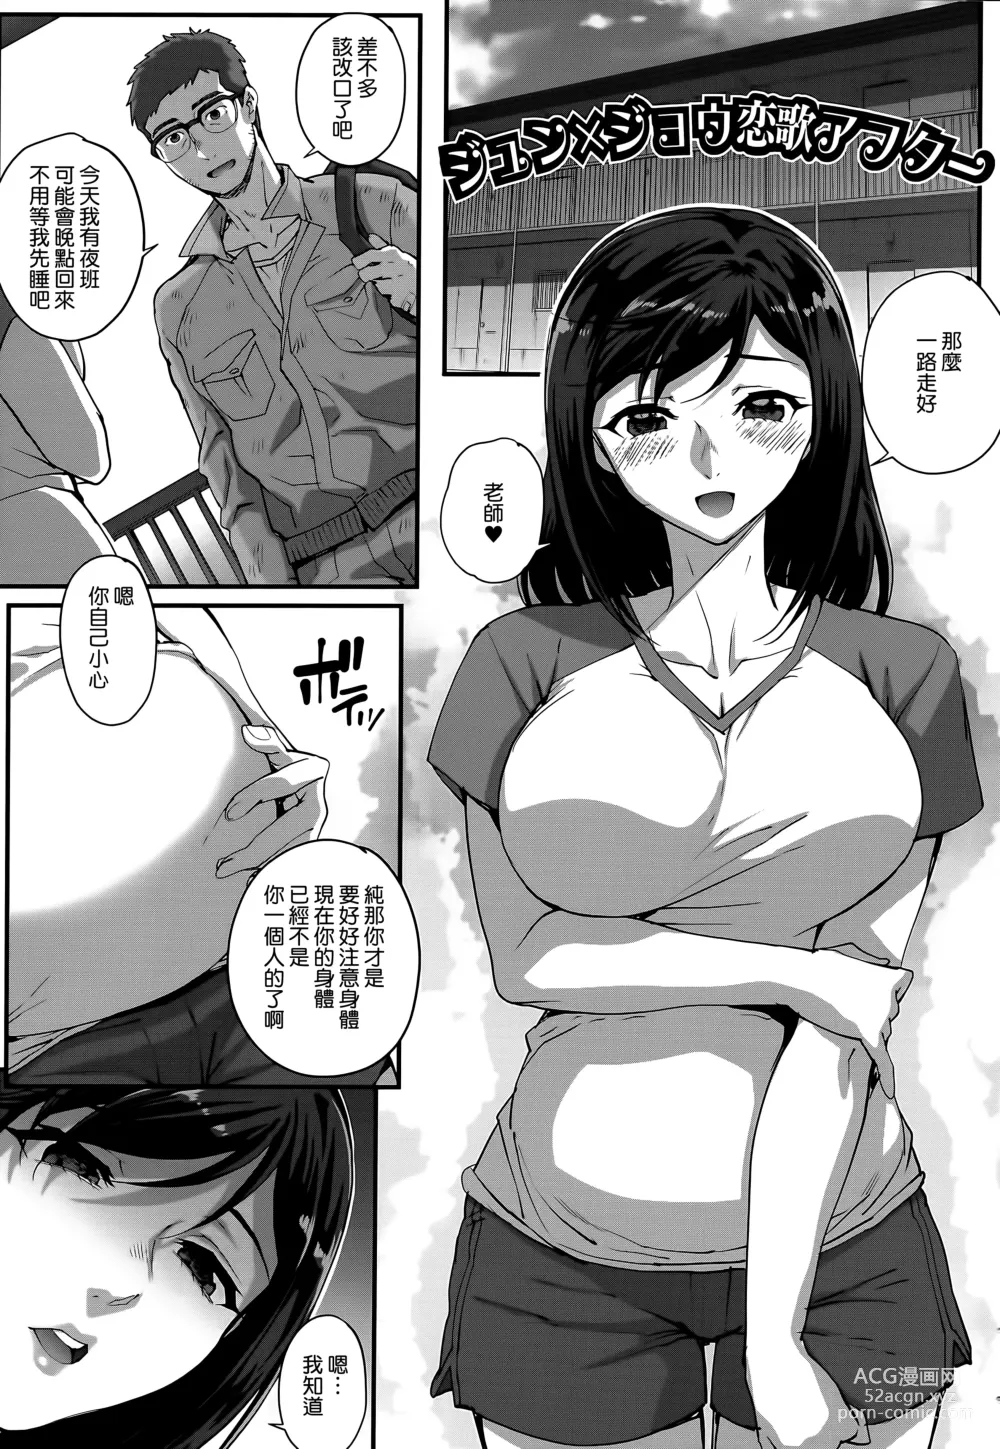 Page 195 of manga Aoharu Snatch - Santch a youth time